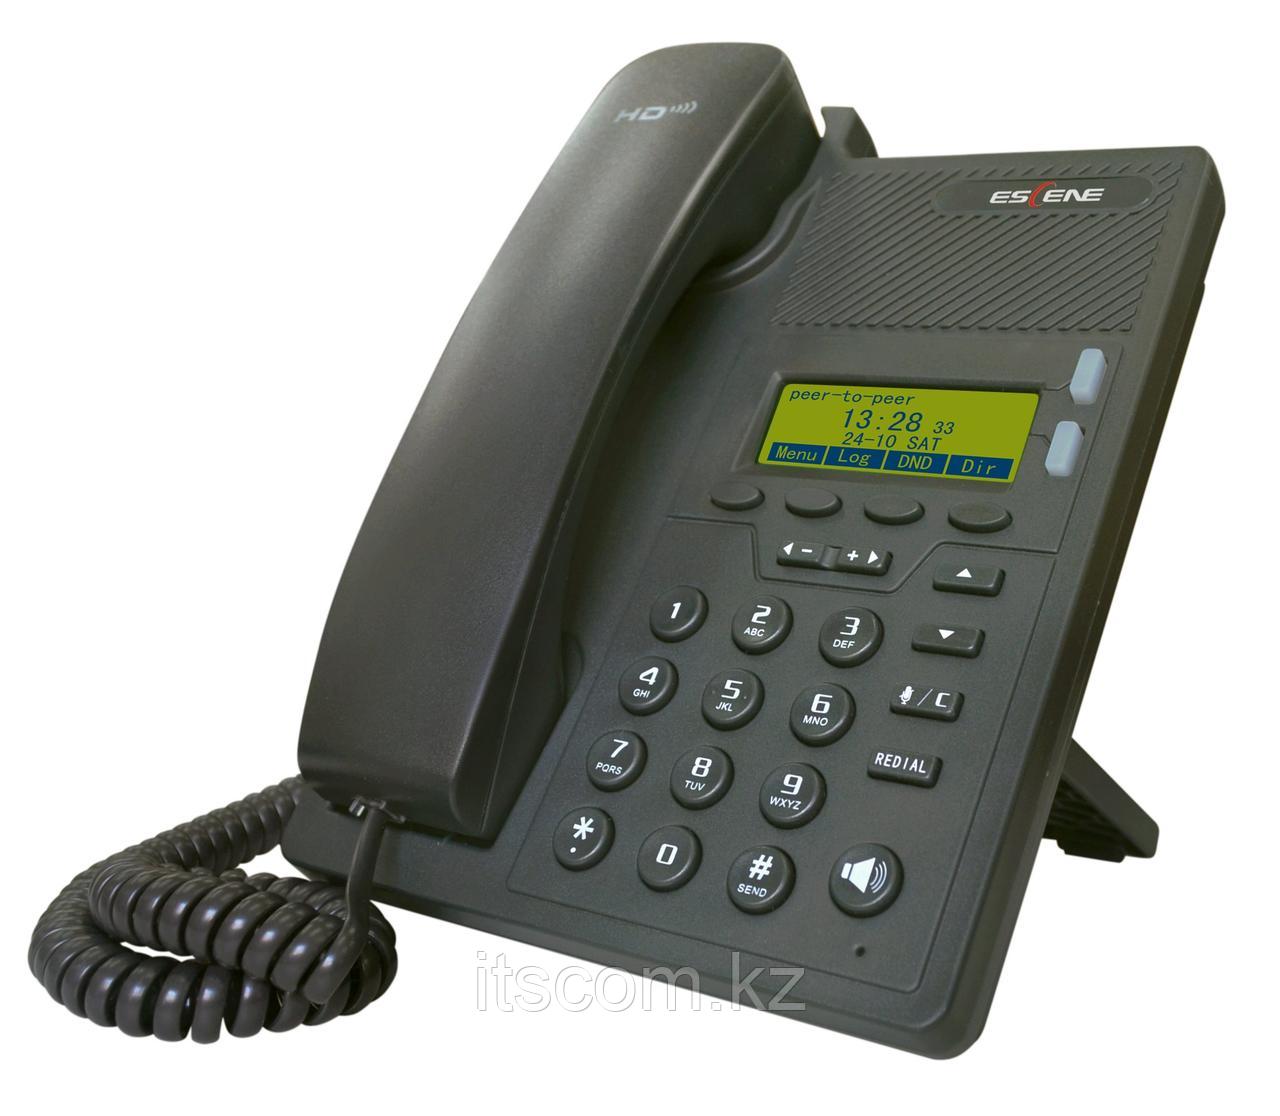 IP-телефон Escene ES205-N